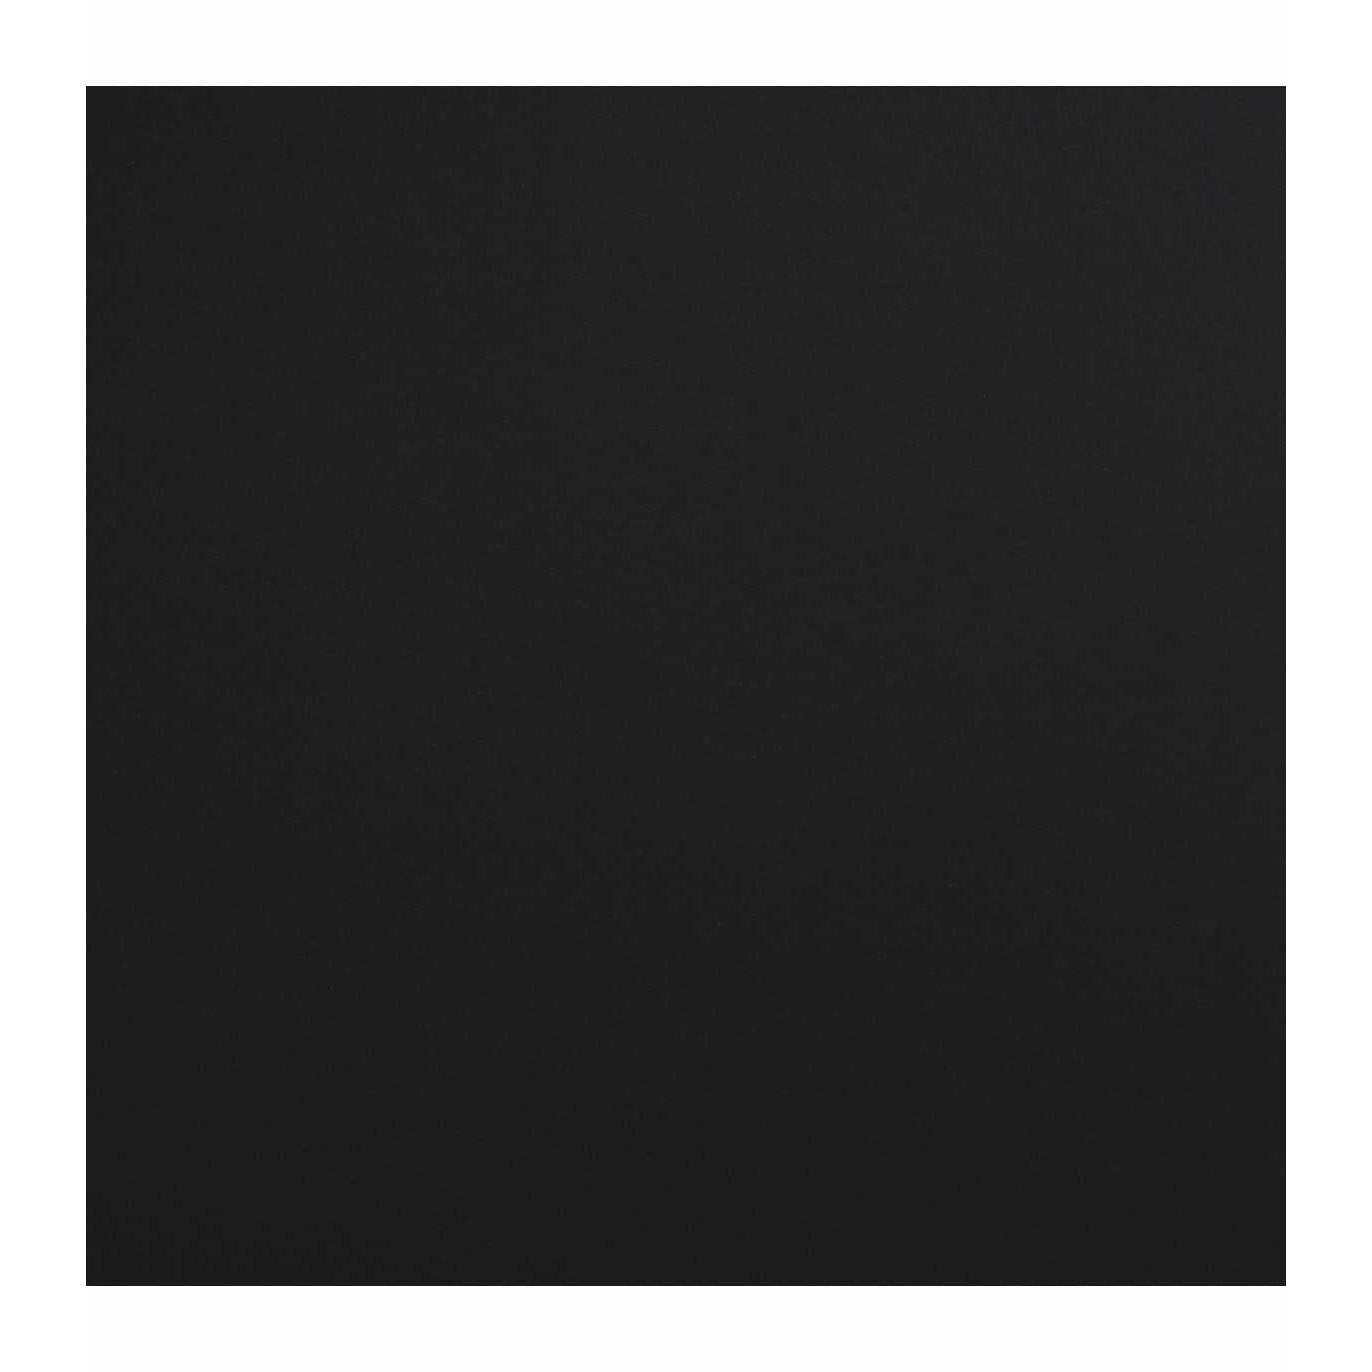 NEW Favini Burano Black Paper 140g A4 - Pack of 50